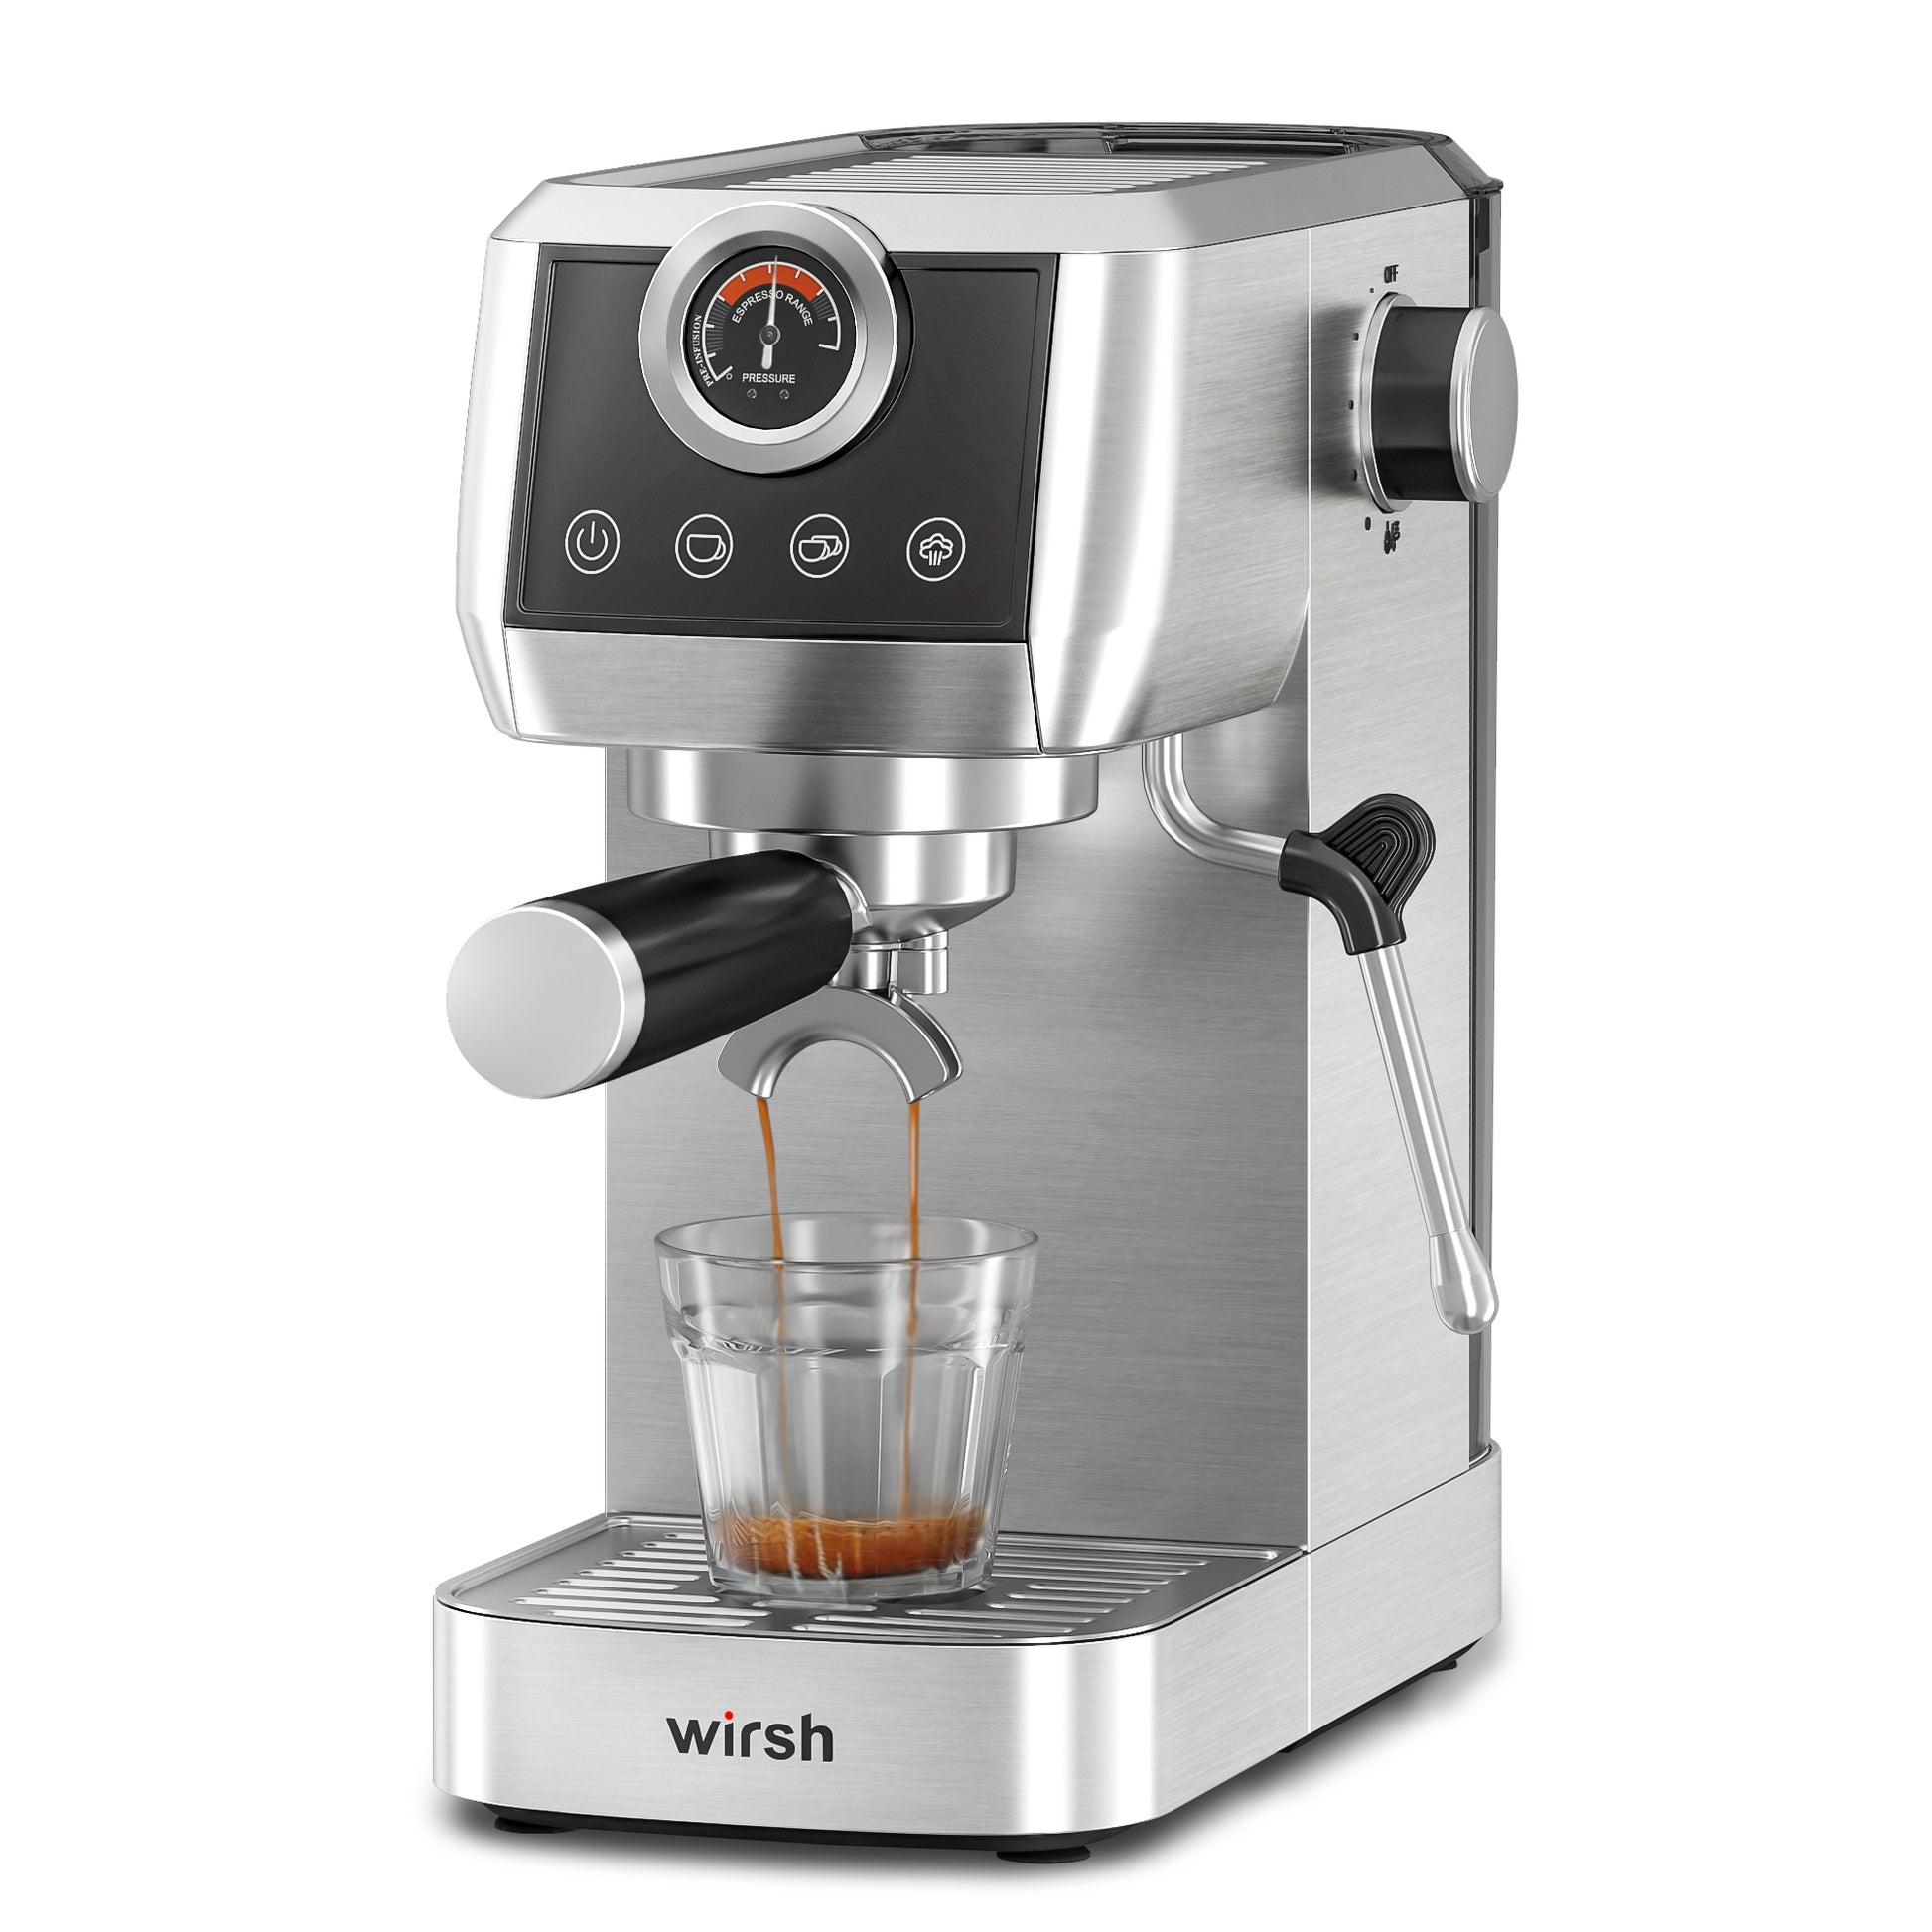 < img src="espresso machine.jpg" alt="wirsh 20bar espresso machine main side view with a cup"/>